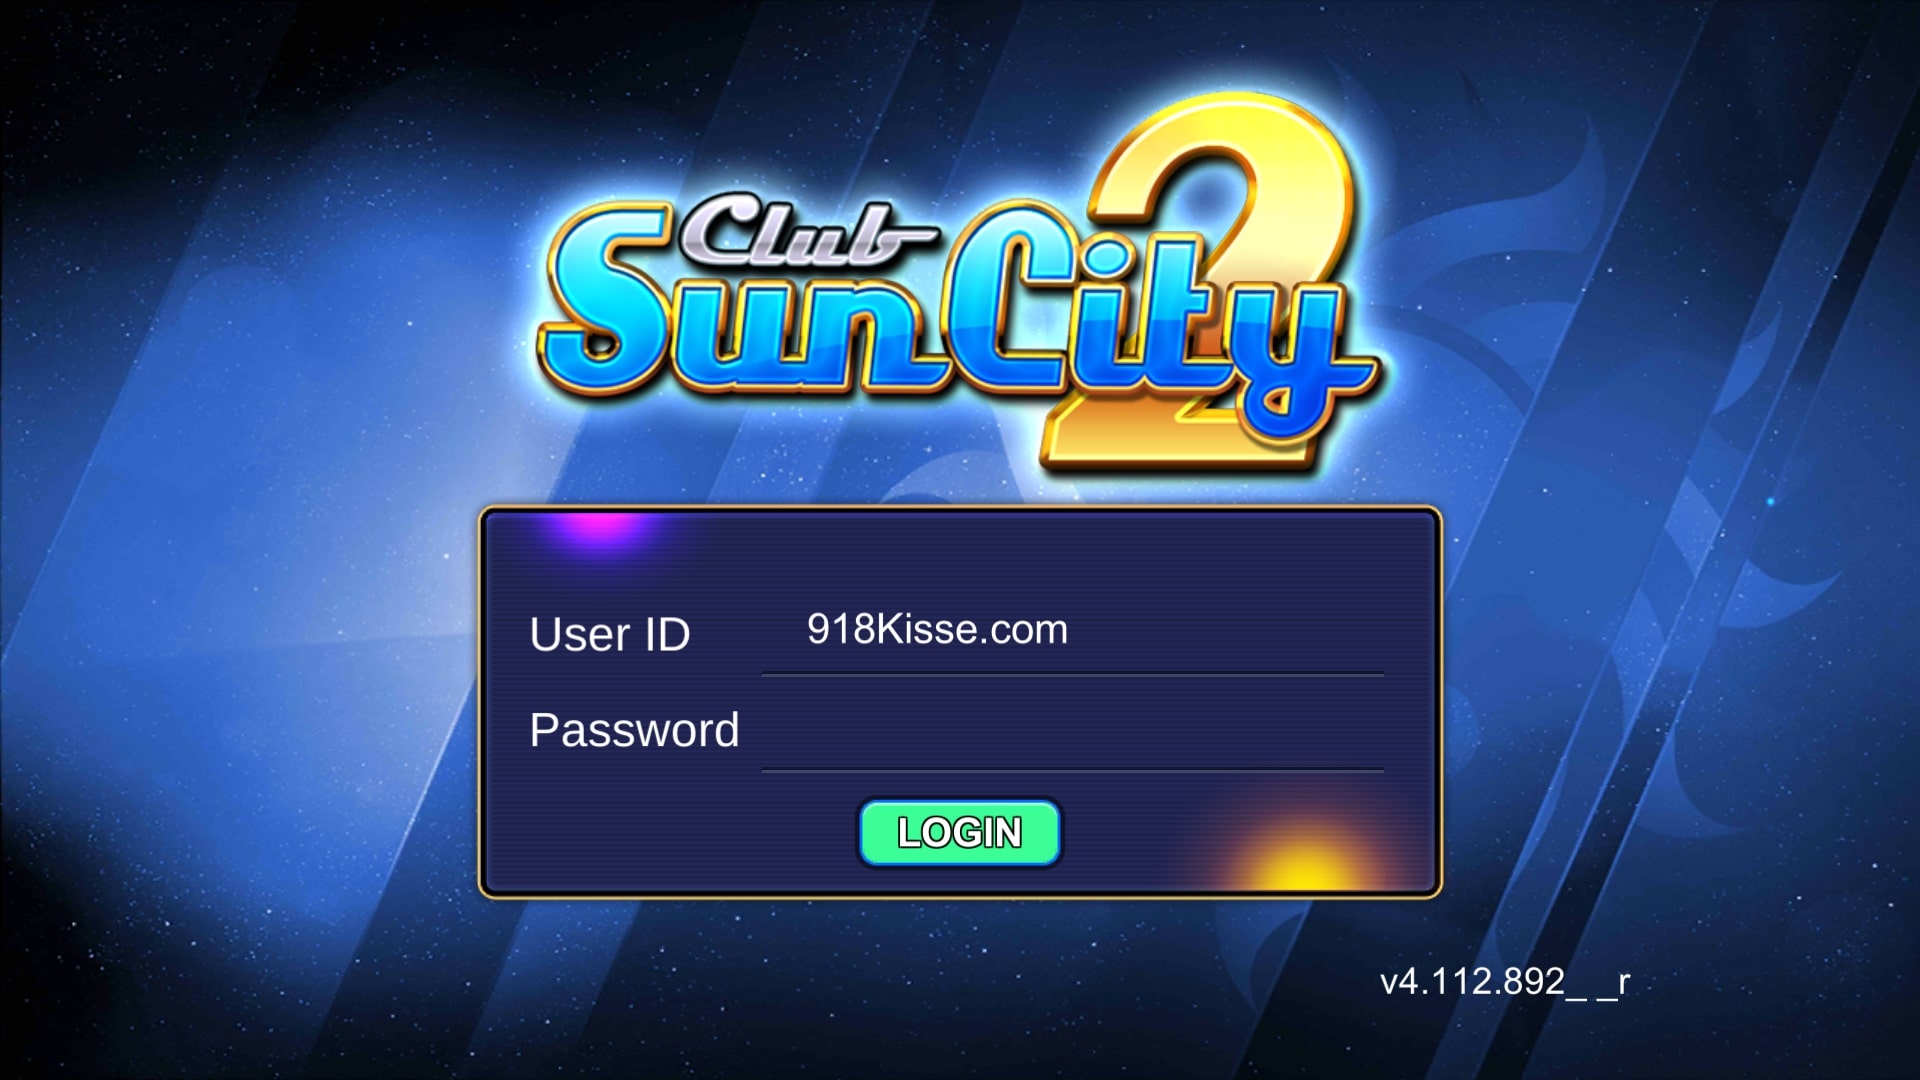 Clubsuncity godolphin888 com application